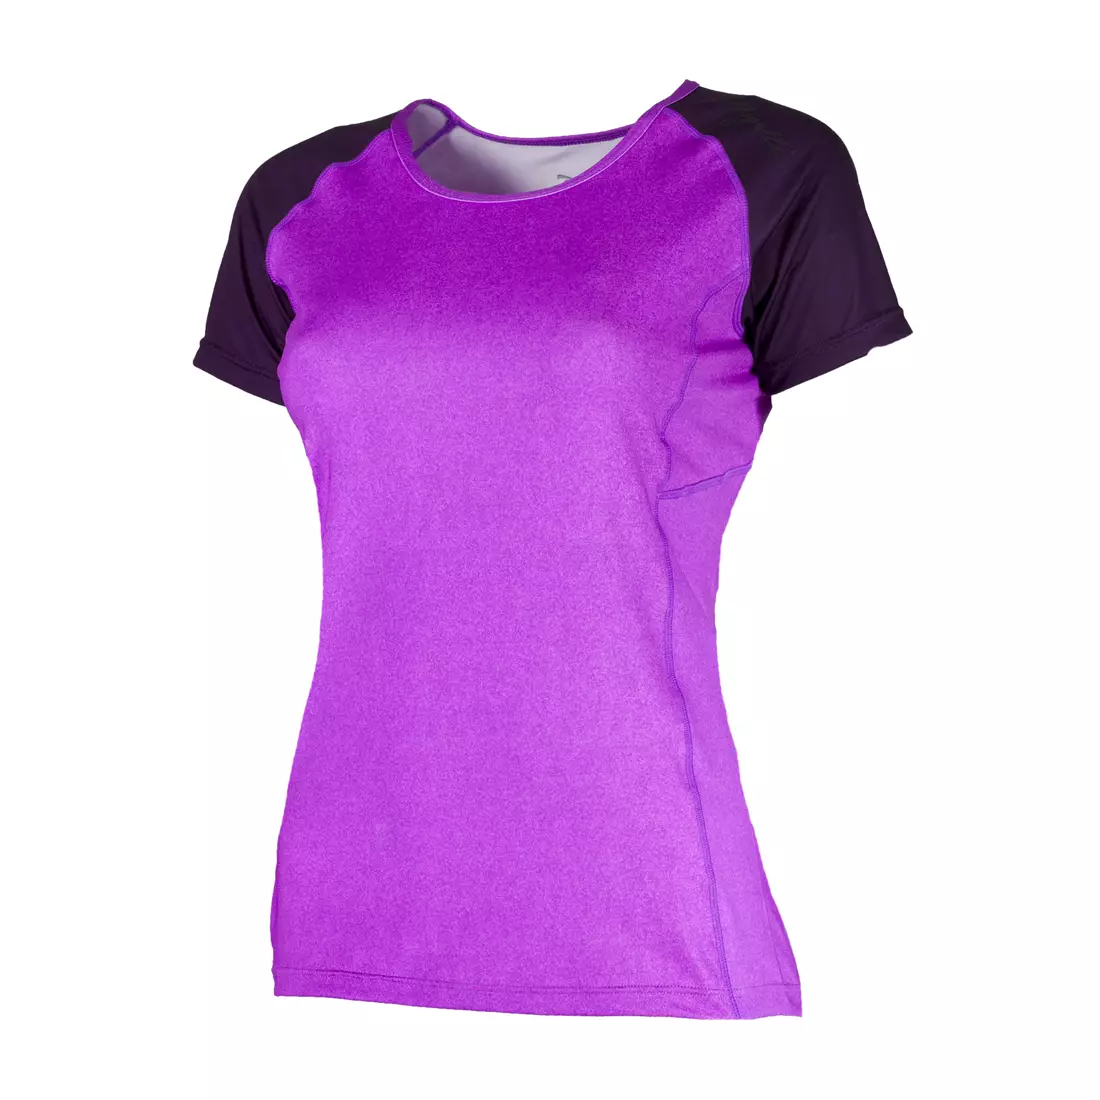 ROGELLI RUN SAMUELA 840.262 - Damen Laufshirt, Farbe: Violett